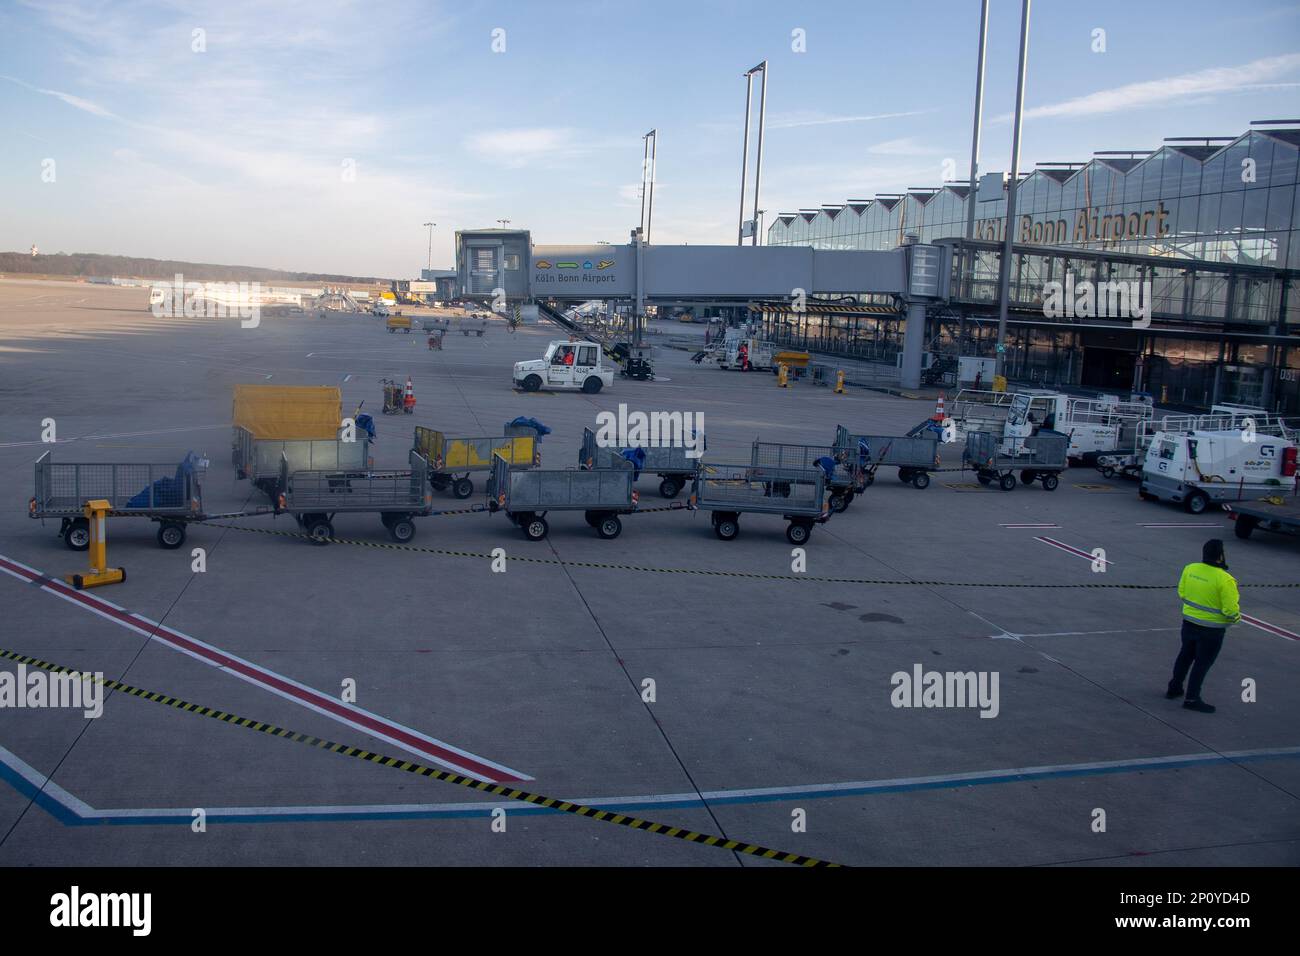 Koln/Bonn Airport. Credit: Sinai Noor / Alamy Stock Photo Stock Photo